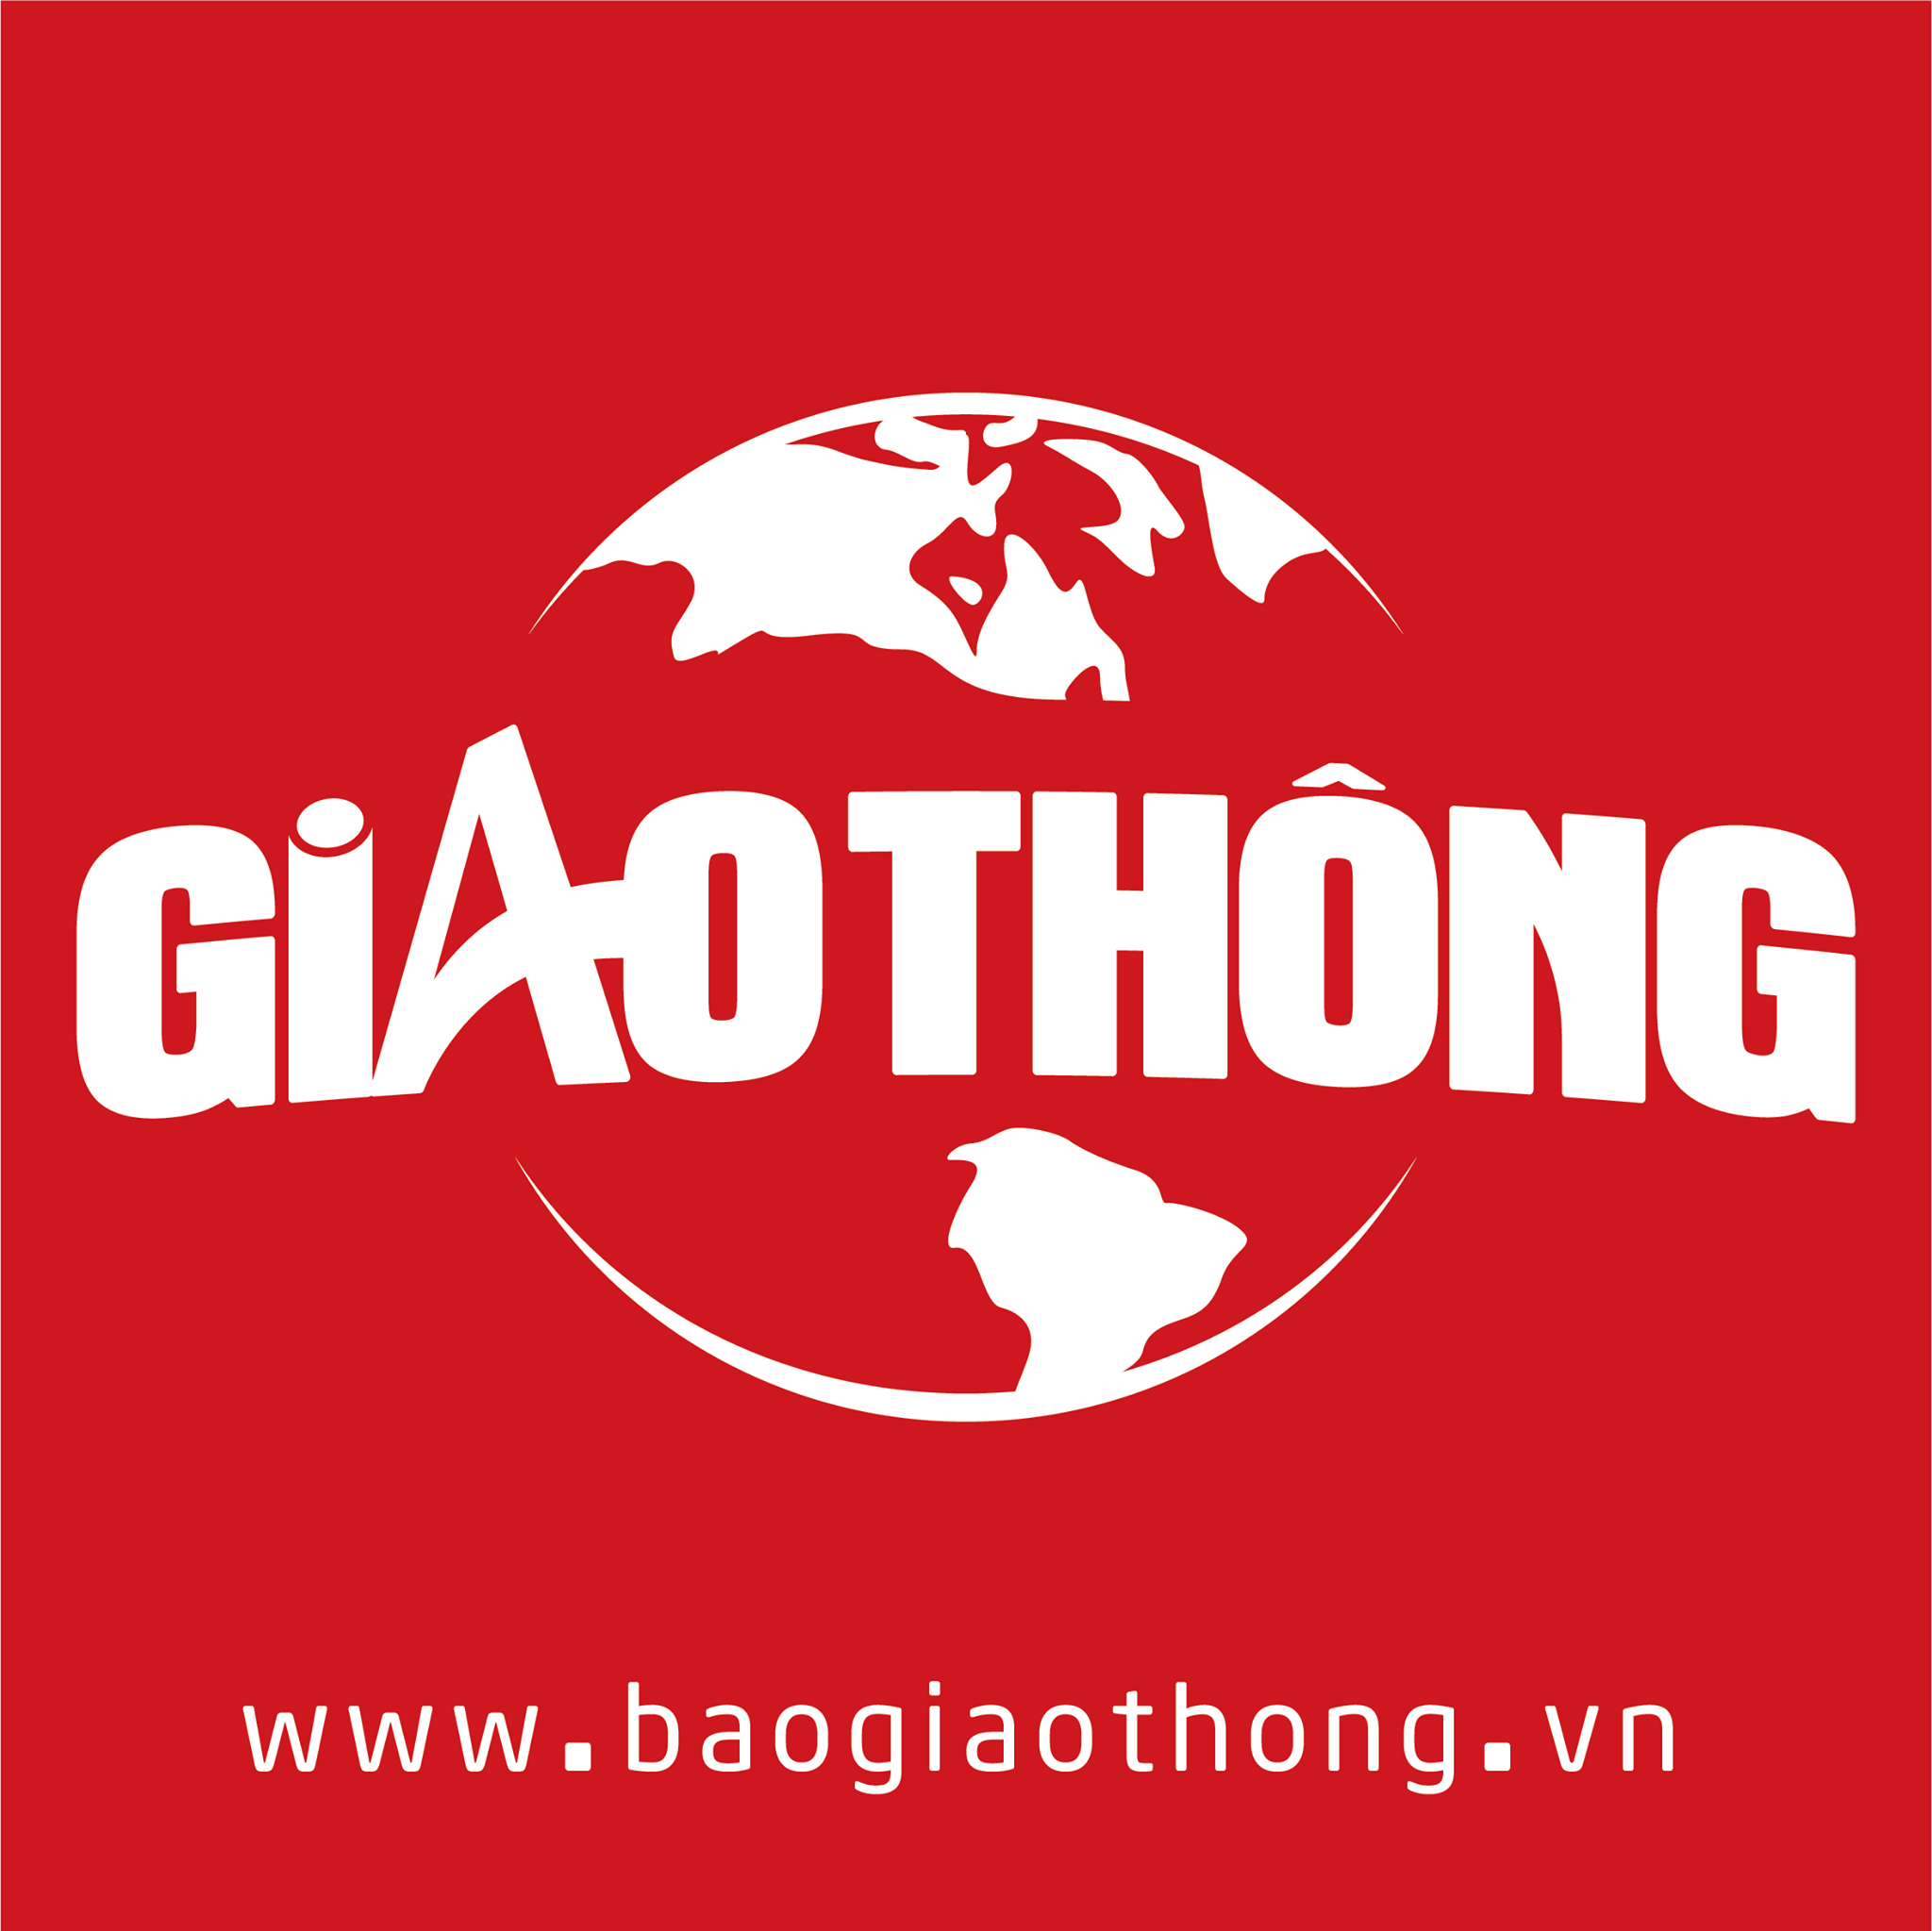 baogiaothong.vn